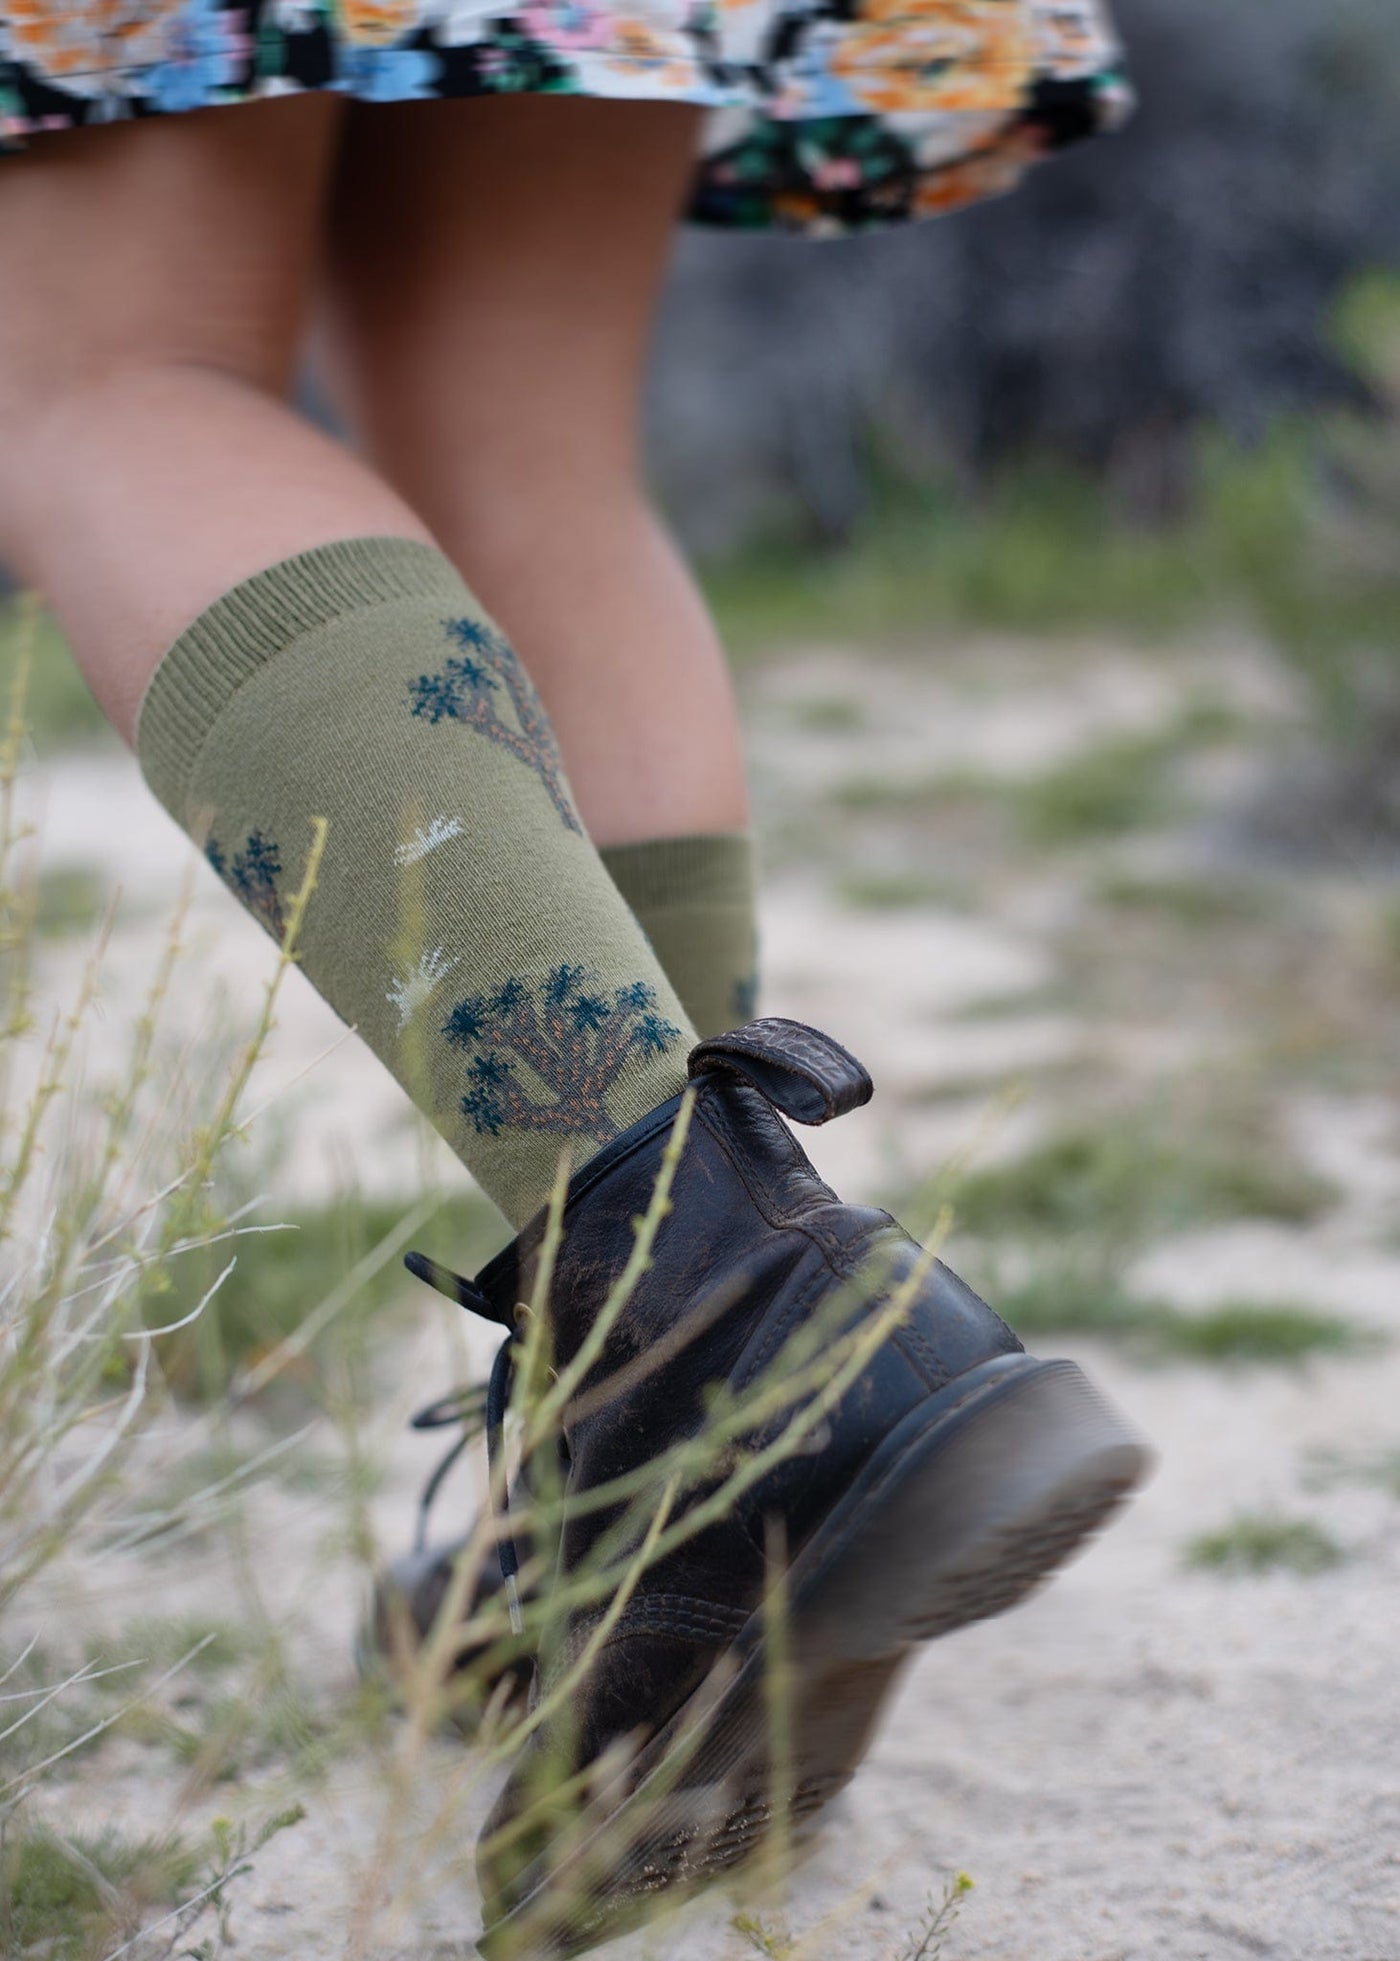 Zkano Crew Joshua Tree - Organic Cotton Crew Socks - Peat organic-socks-made-in-usa